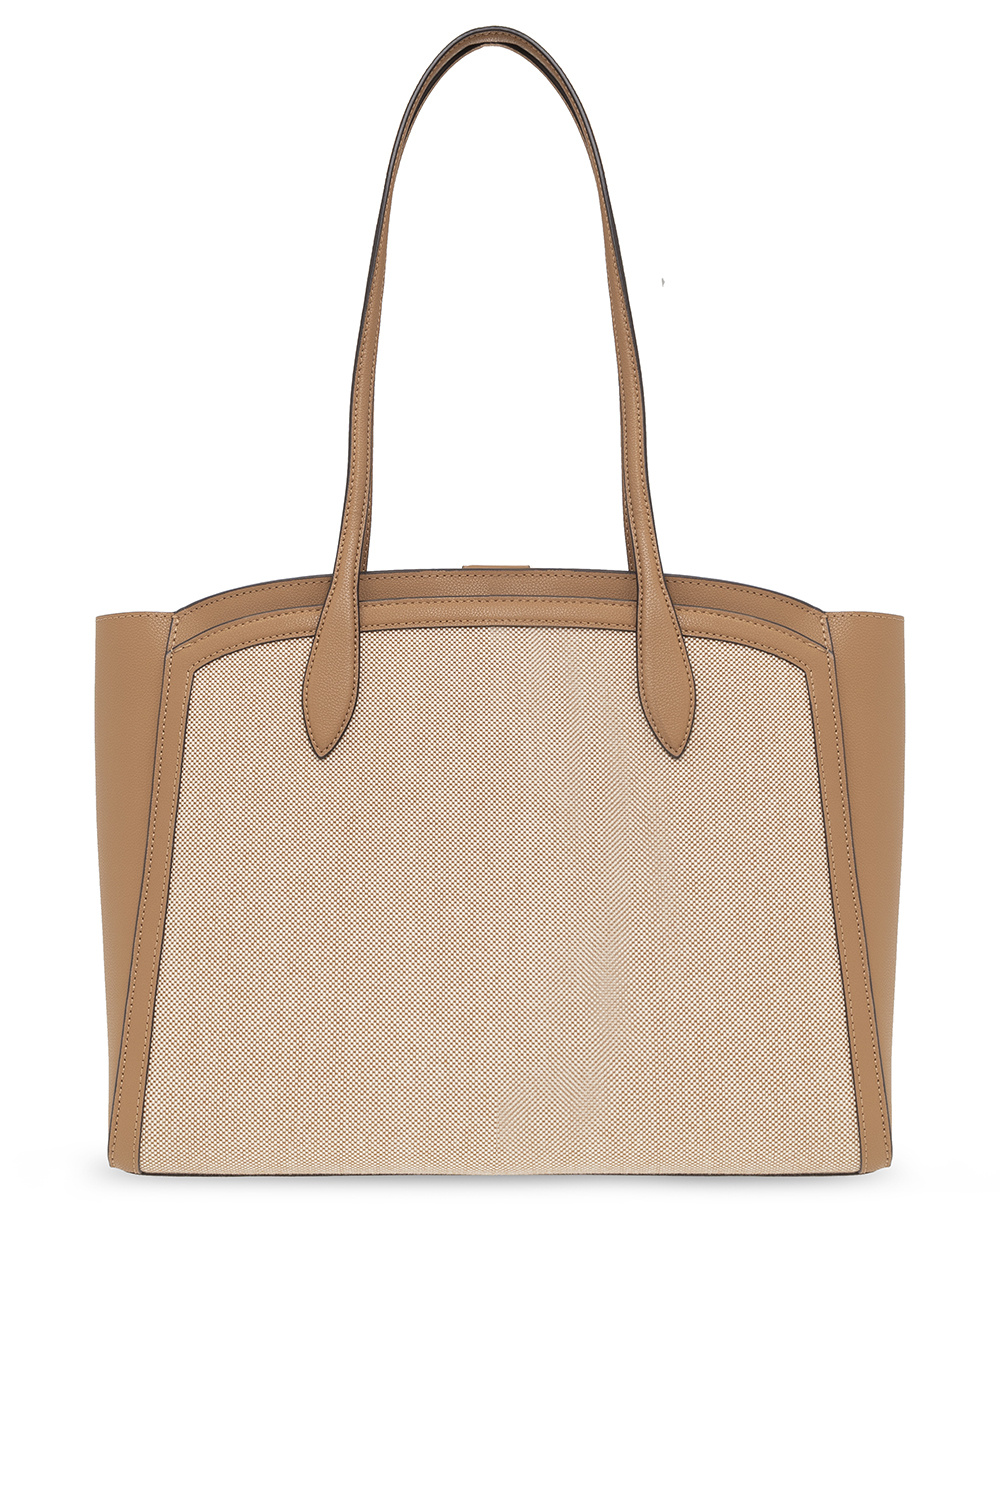 Kate Spade ‘Voyage Large’ shopper bag